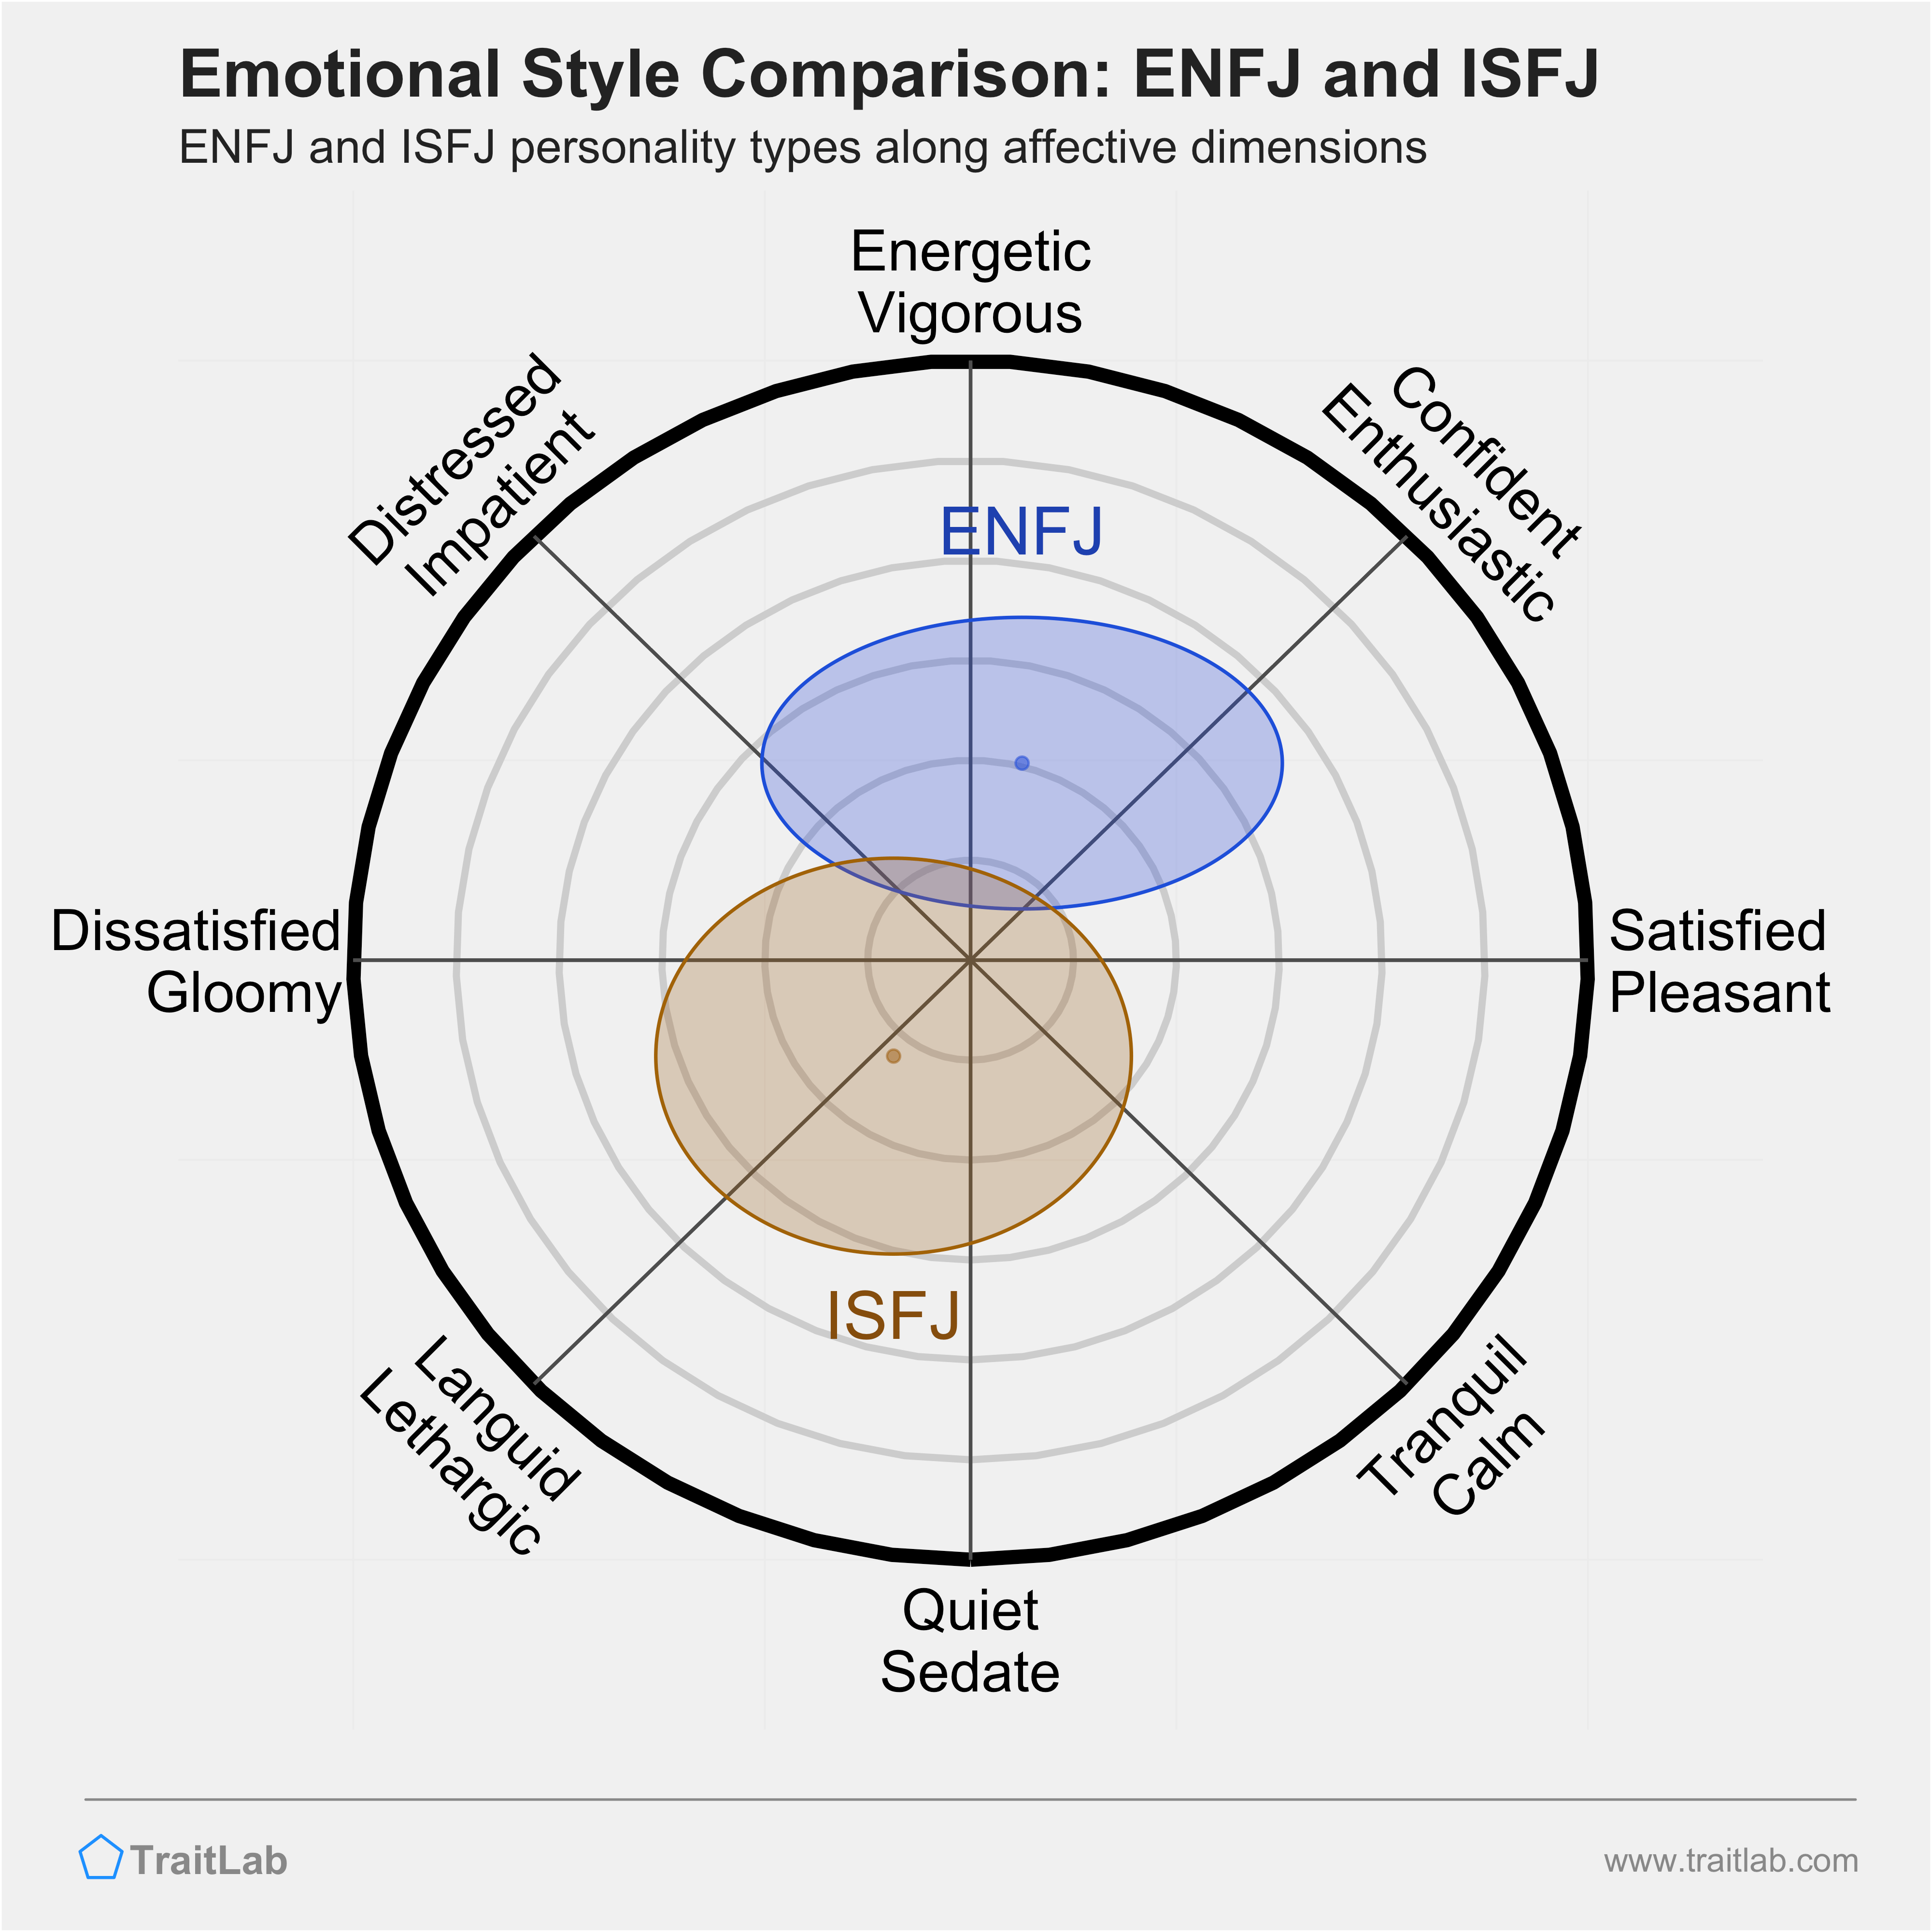 ENFJ and ISFJ comparison across emotional (affective) dimensions